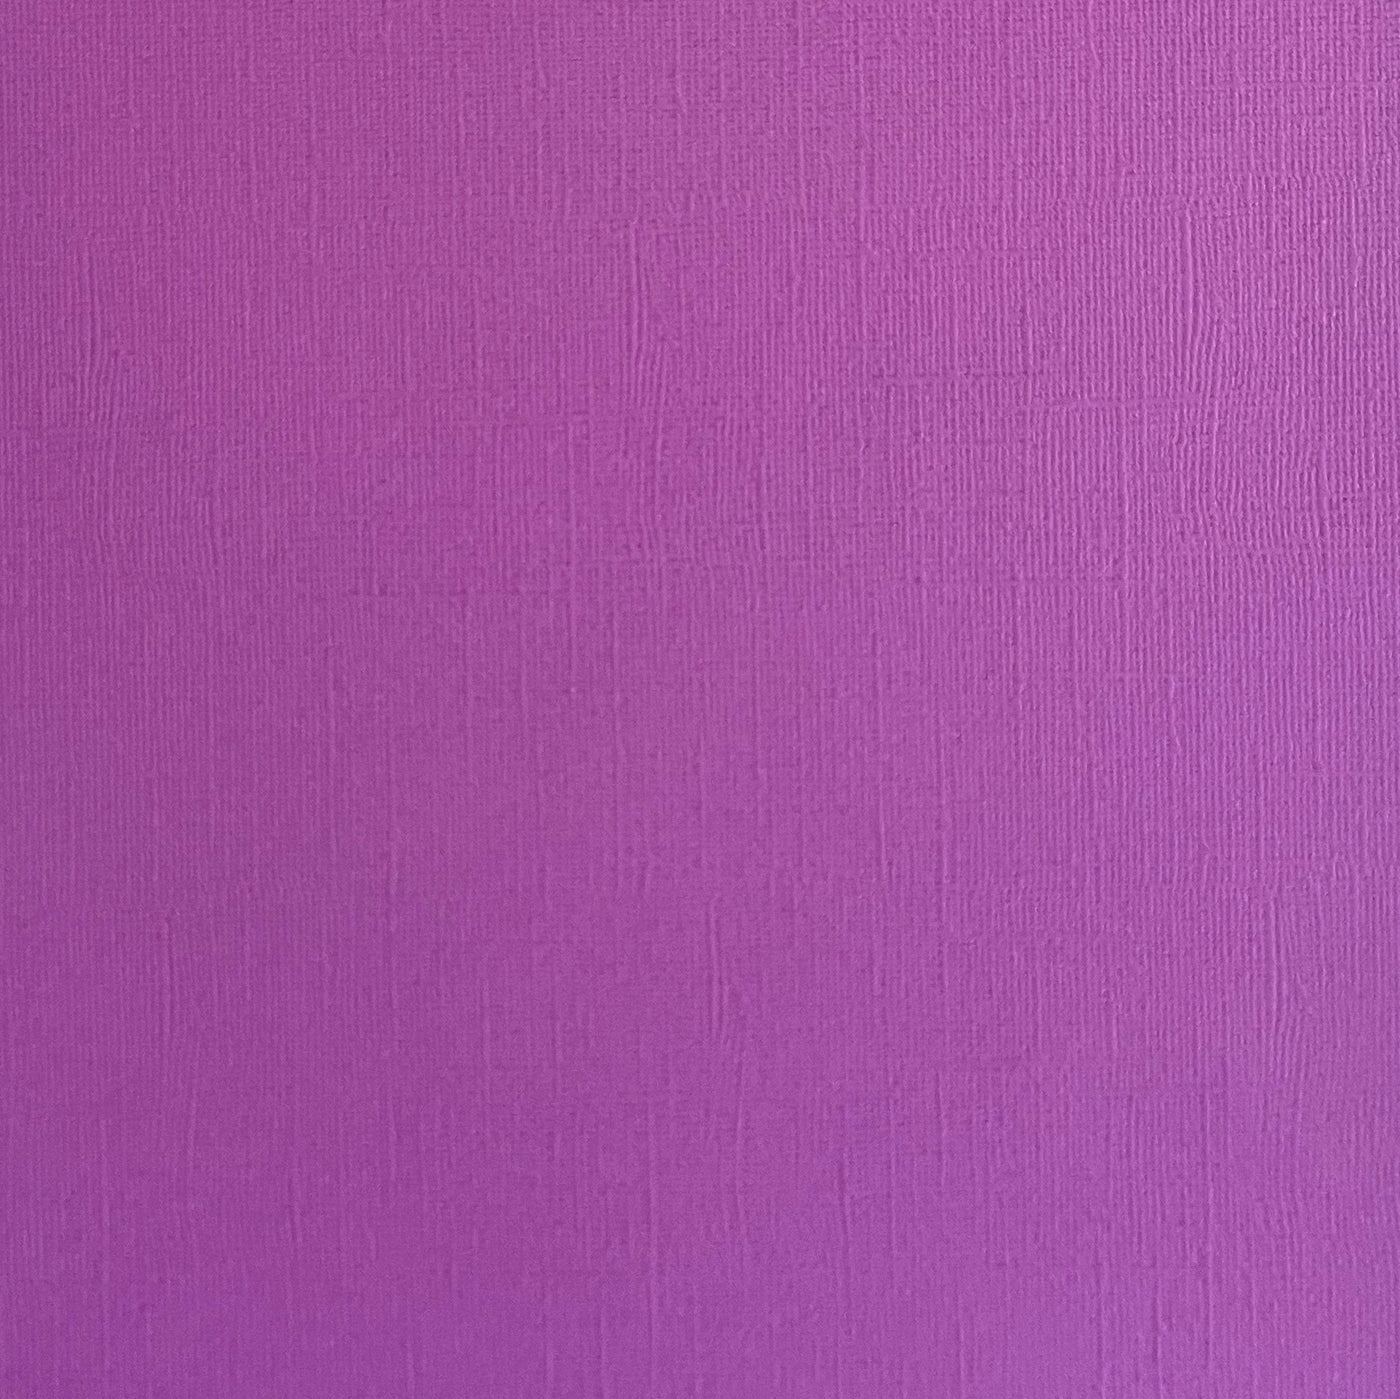 MARDI GRAS - Vibrant Purple Textured 12x12 Cardstock - Encore Paper